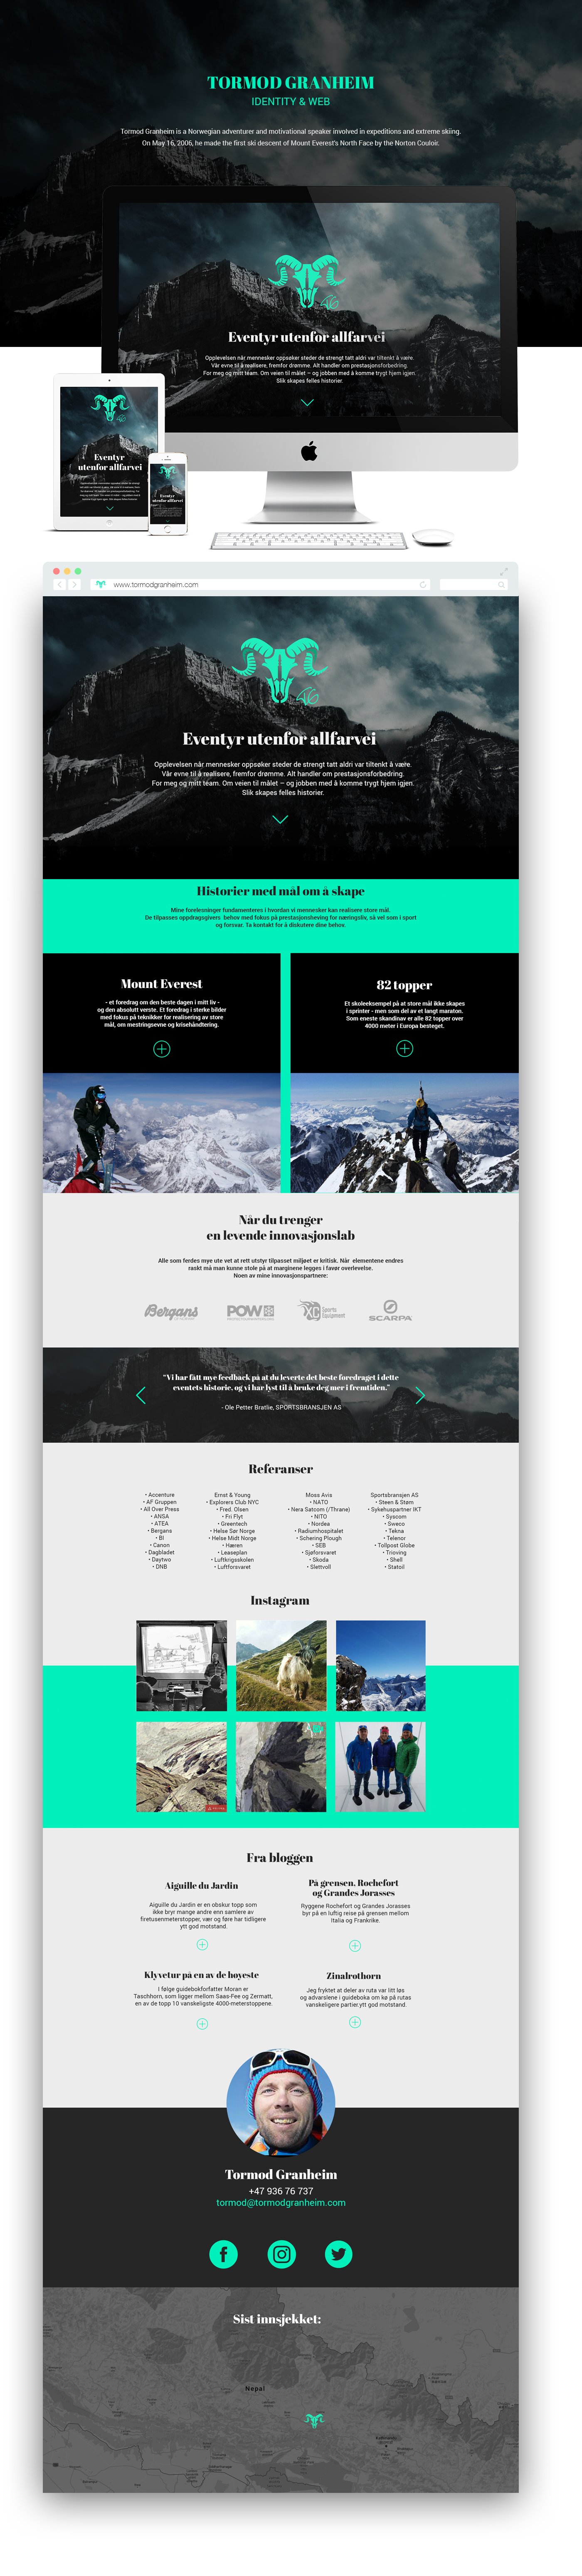 Webdesign site identity adventure skiing design interactive logo extreme winter